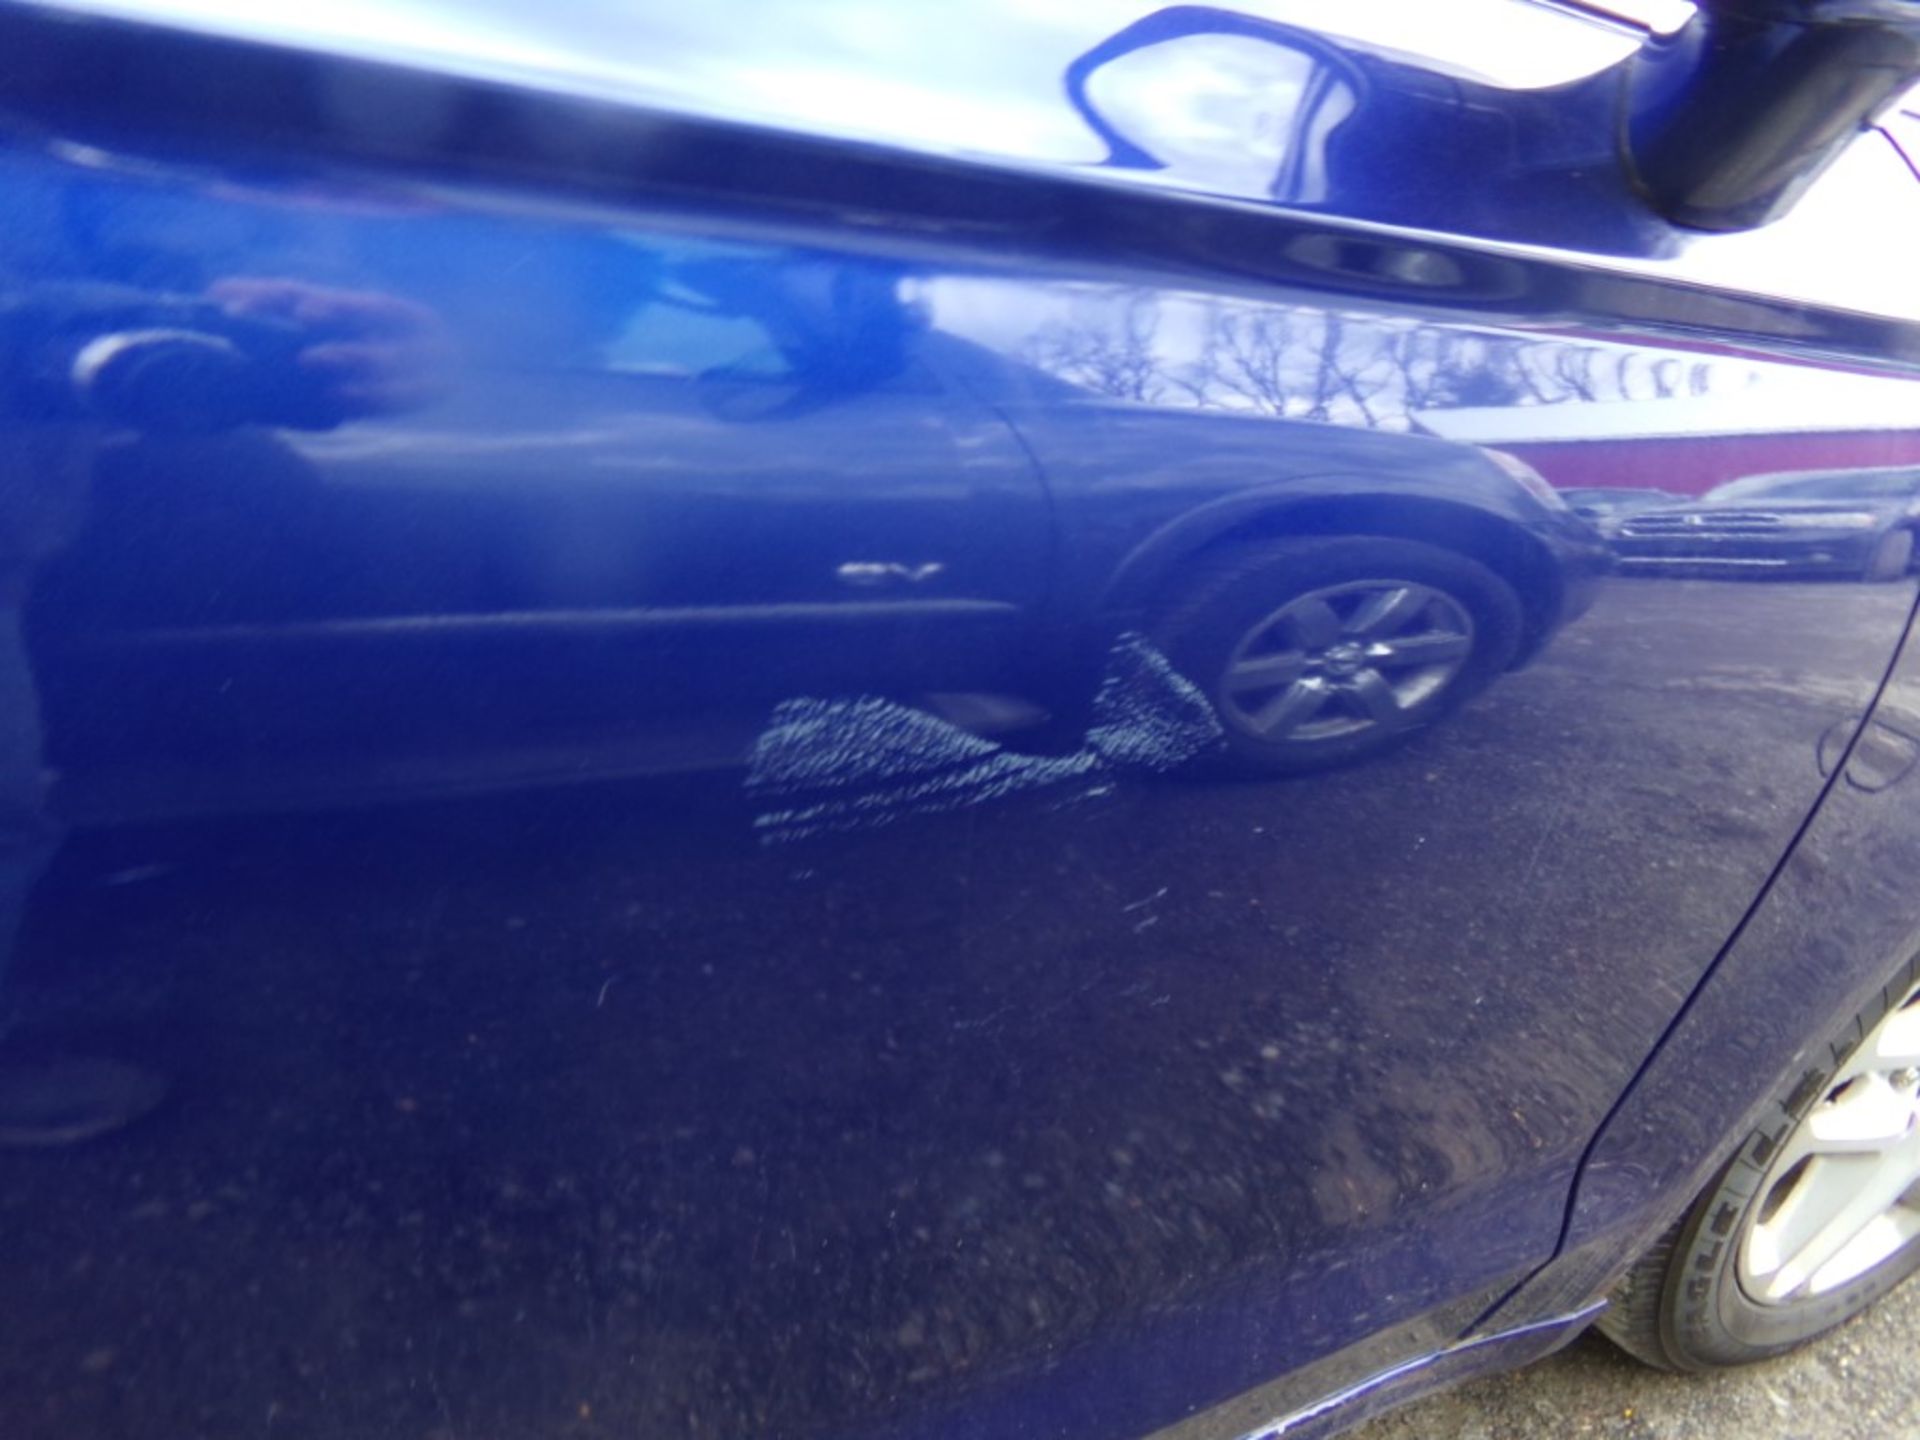 2014 Ford Fusion SE, Blue, 174,739 Miles, VIN#1FA6P0H7XE5365423, AIR BAG LIGHT IS ON, MINOR DAMAGE - Bild 16 aus 18